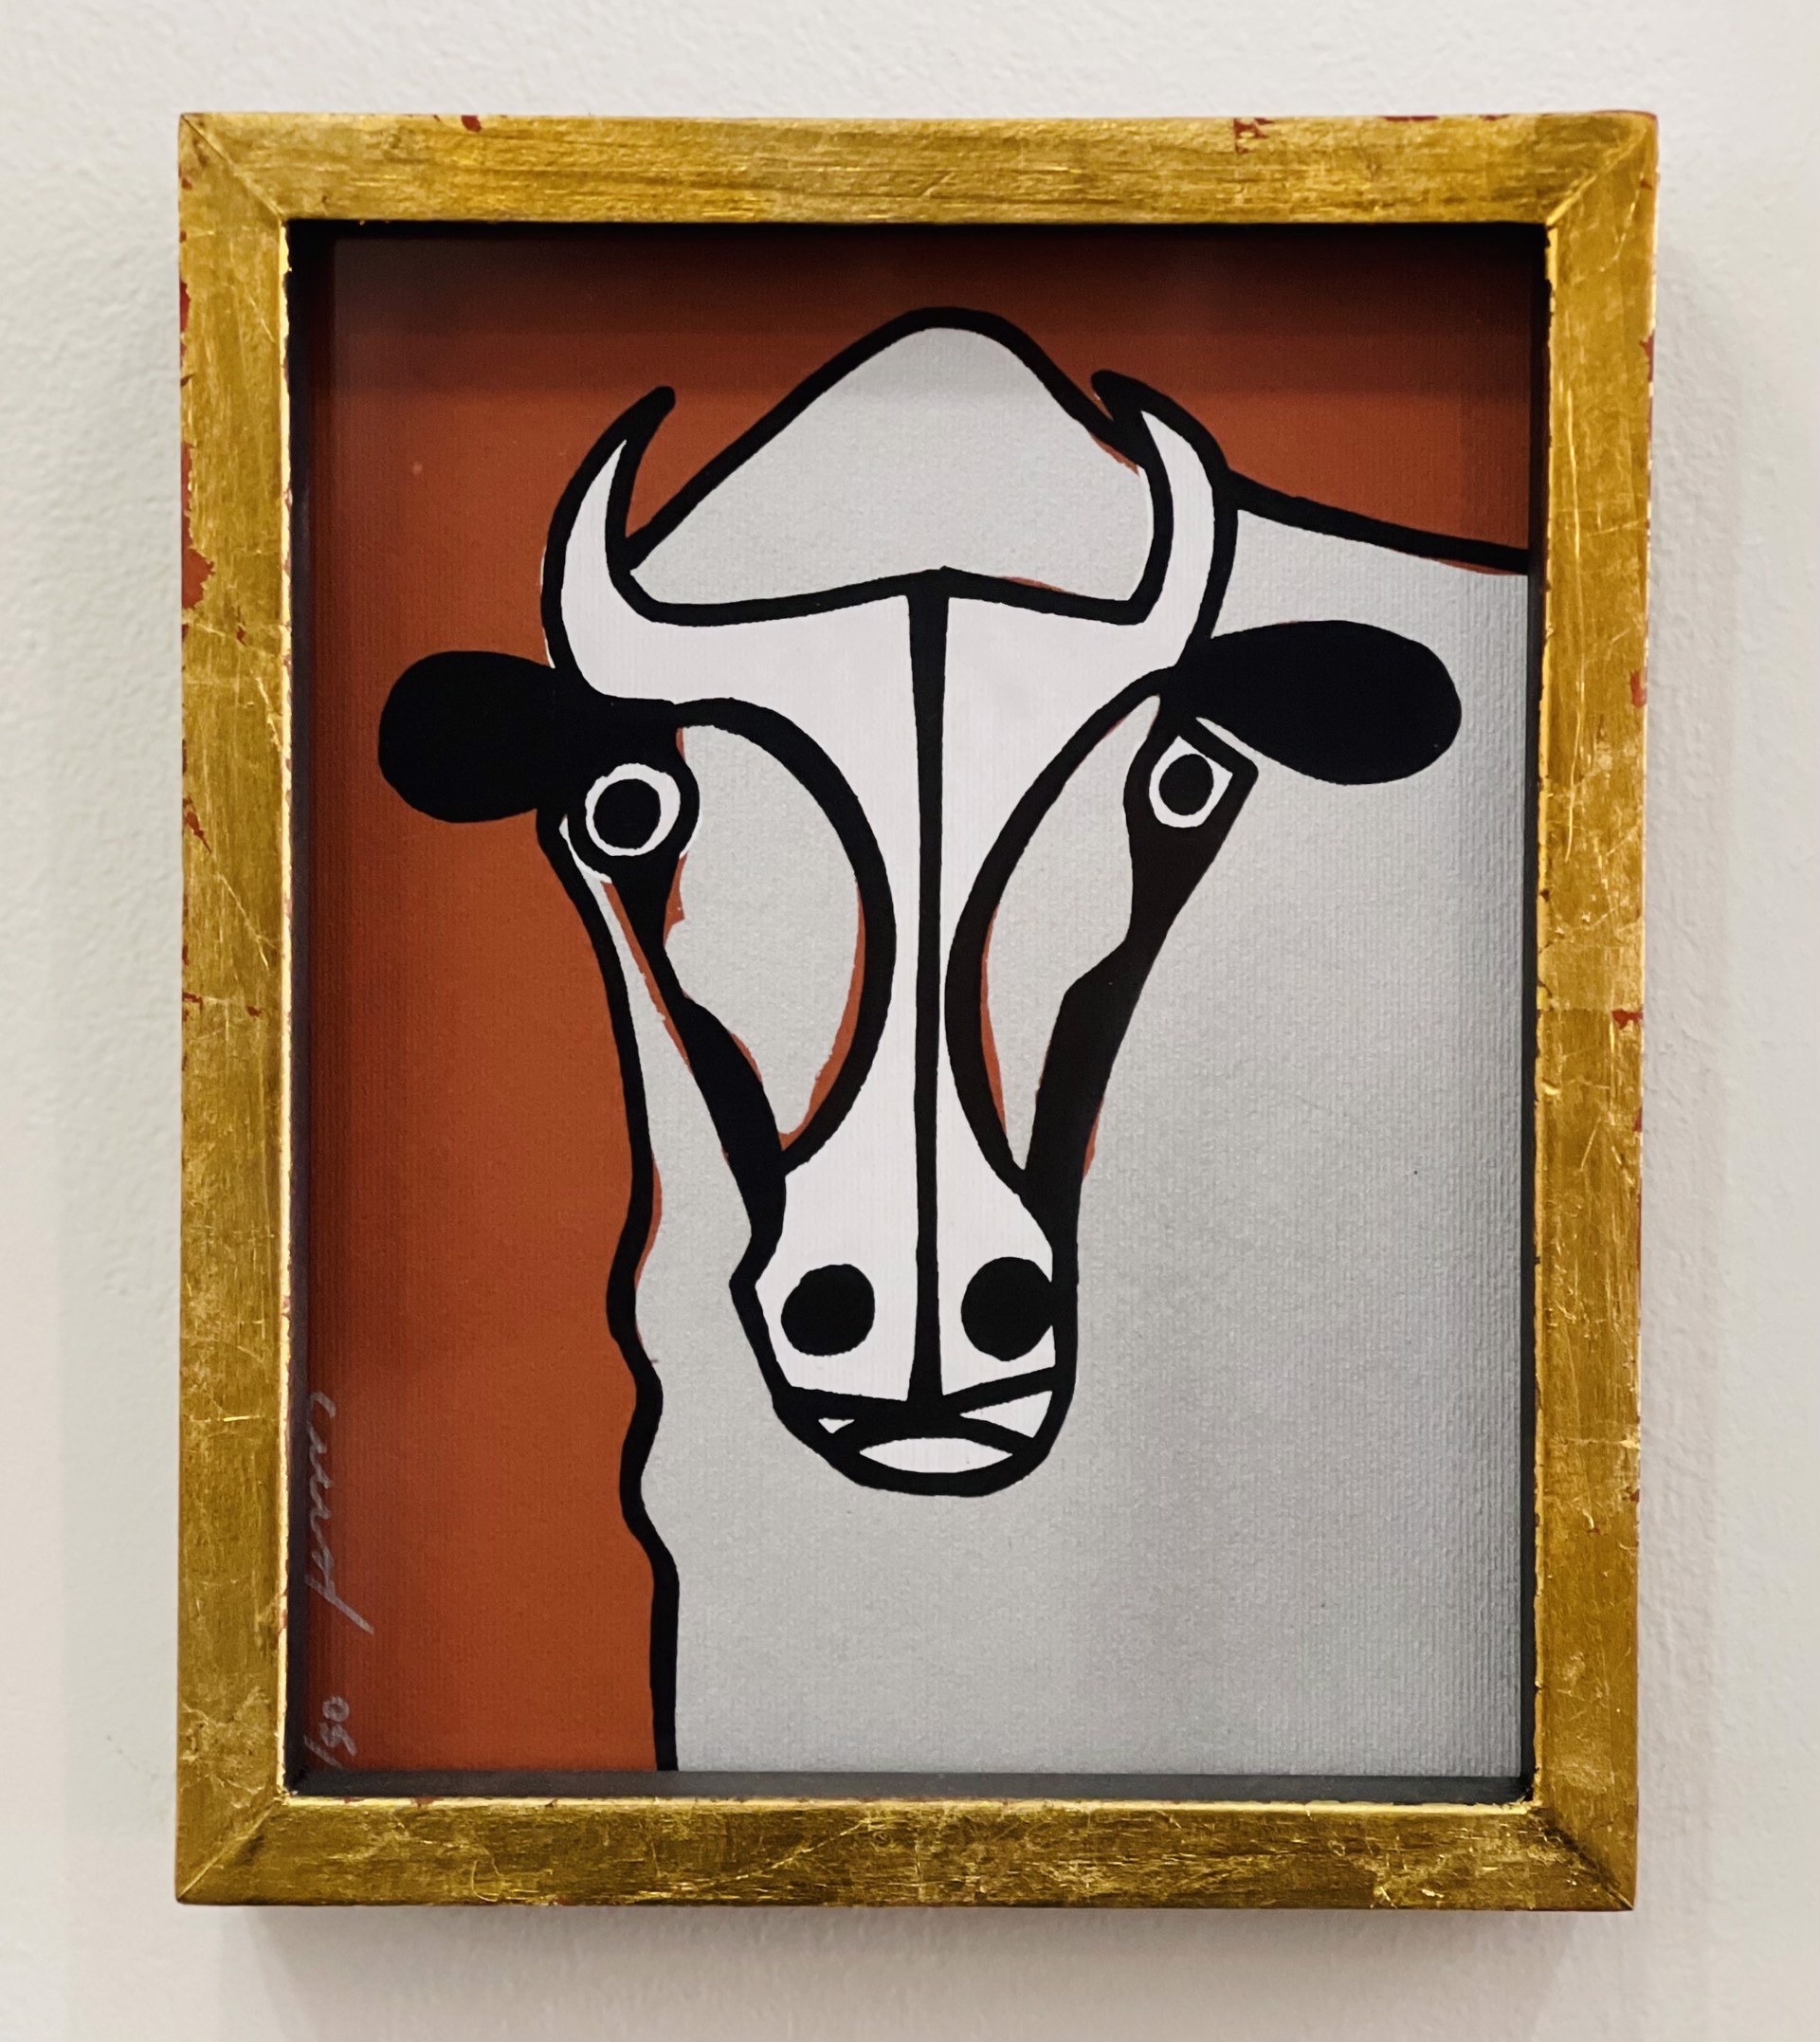 Untitled (Bull) by Damián Lescas